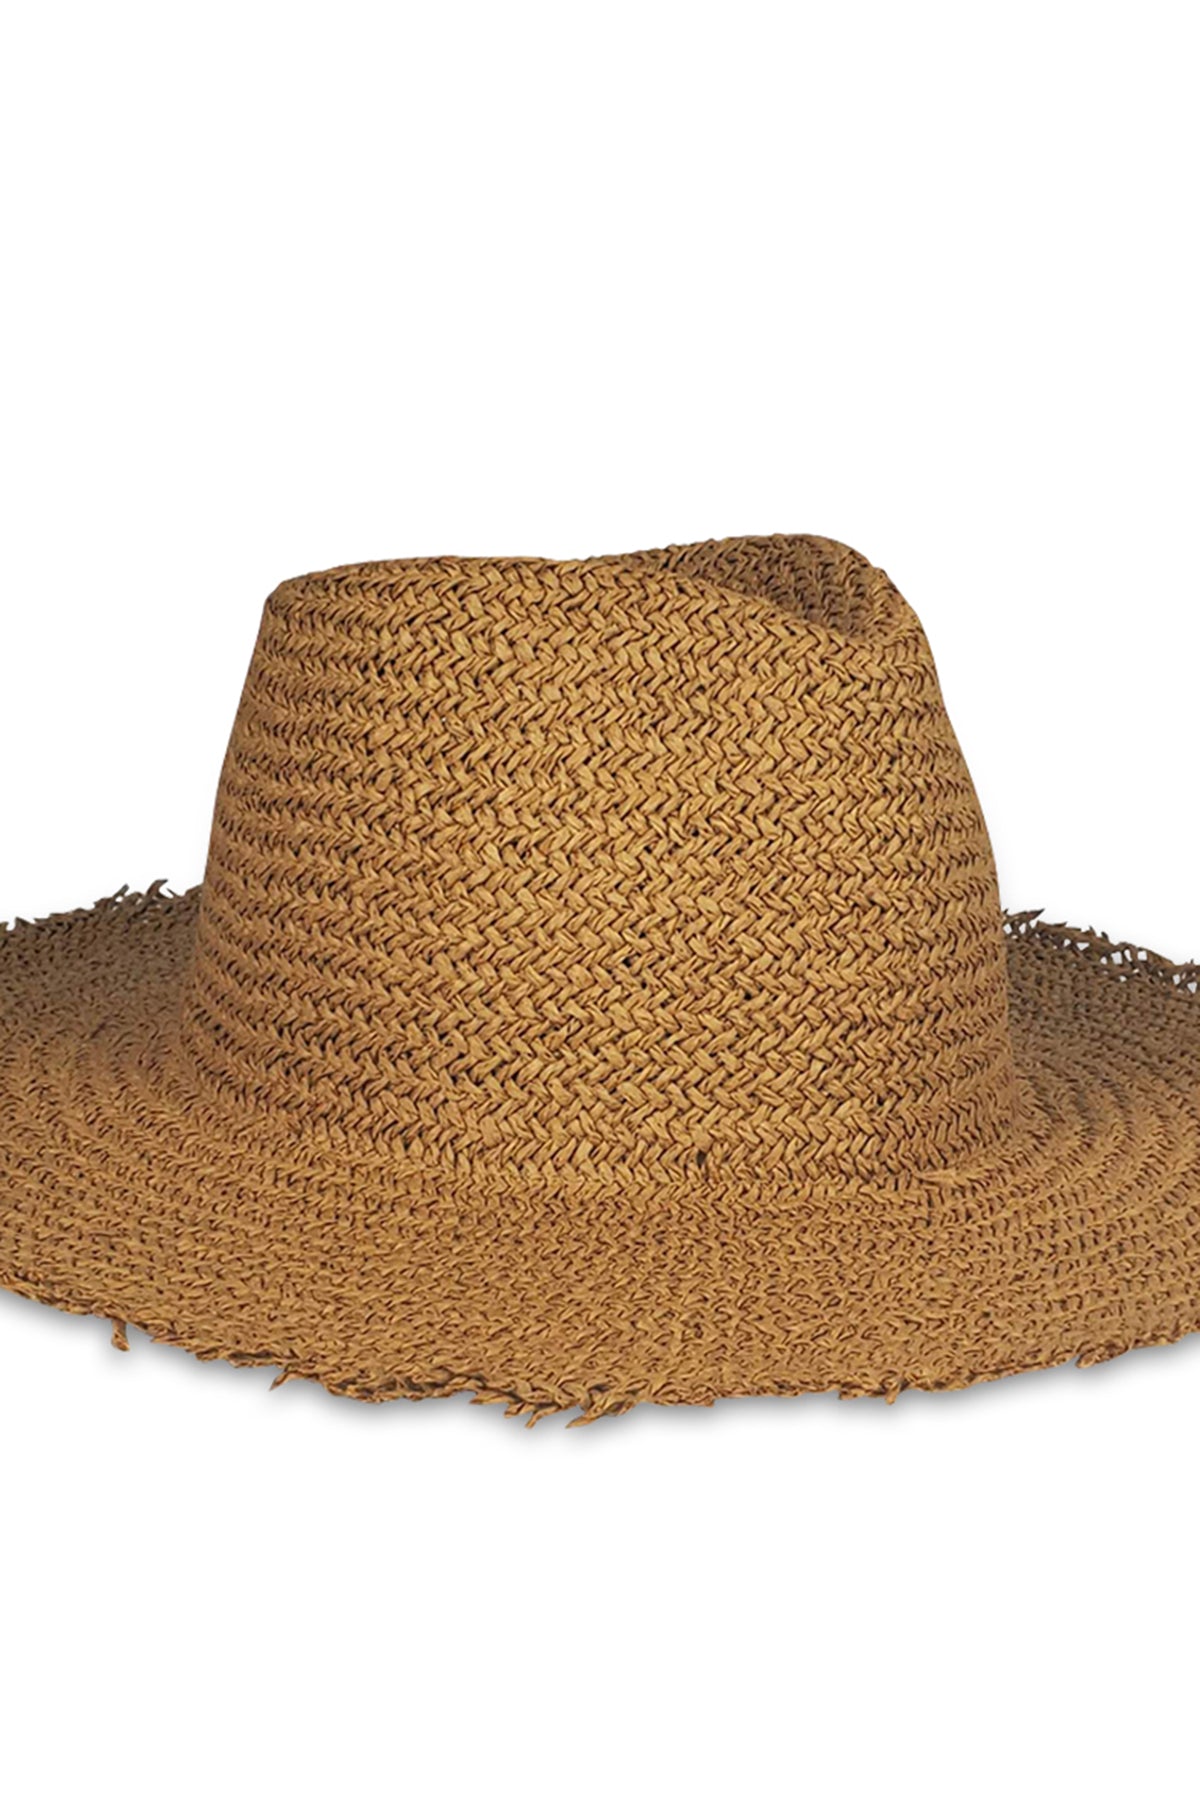 Beach Rancher Hat Toast Detail-17958349275329